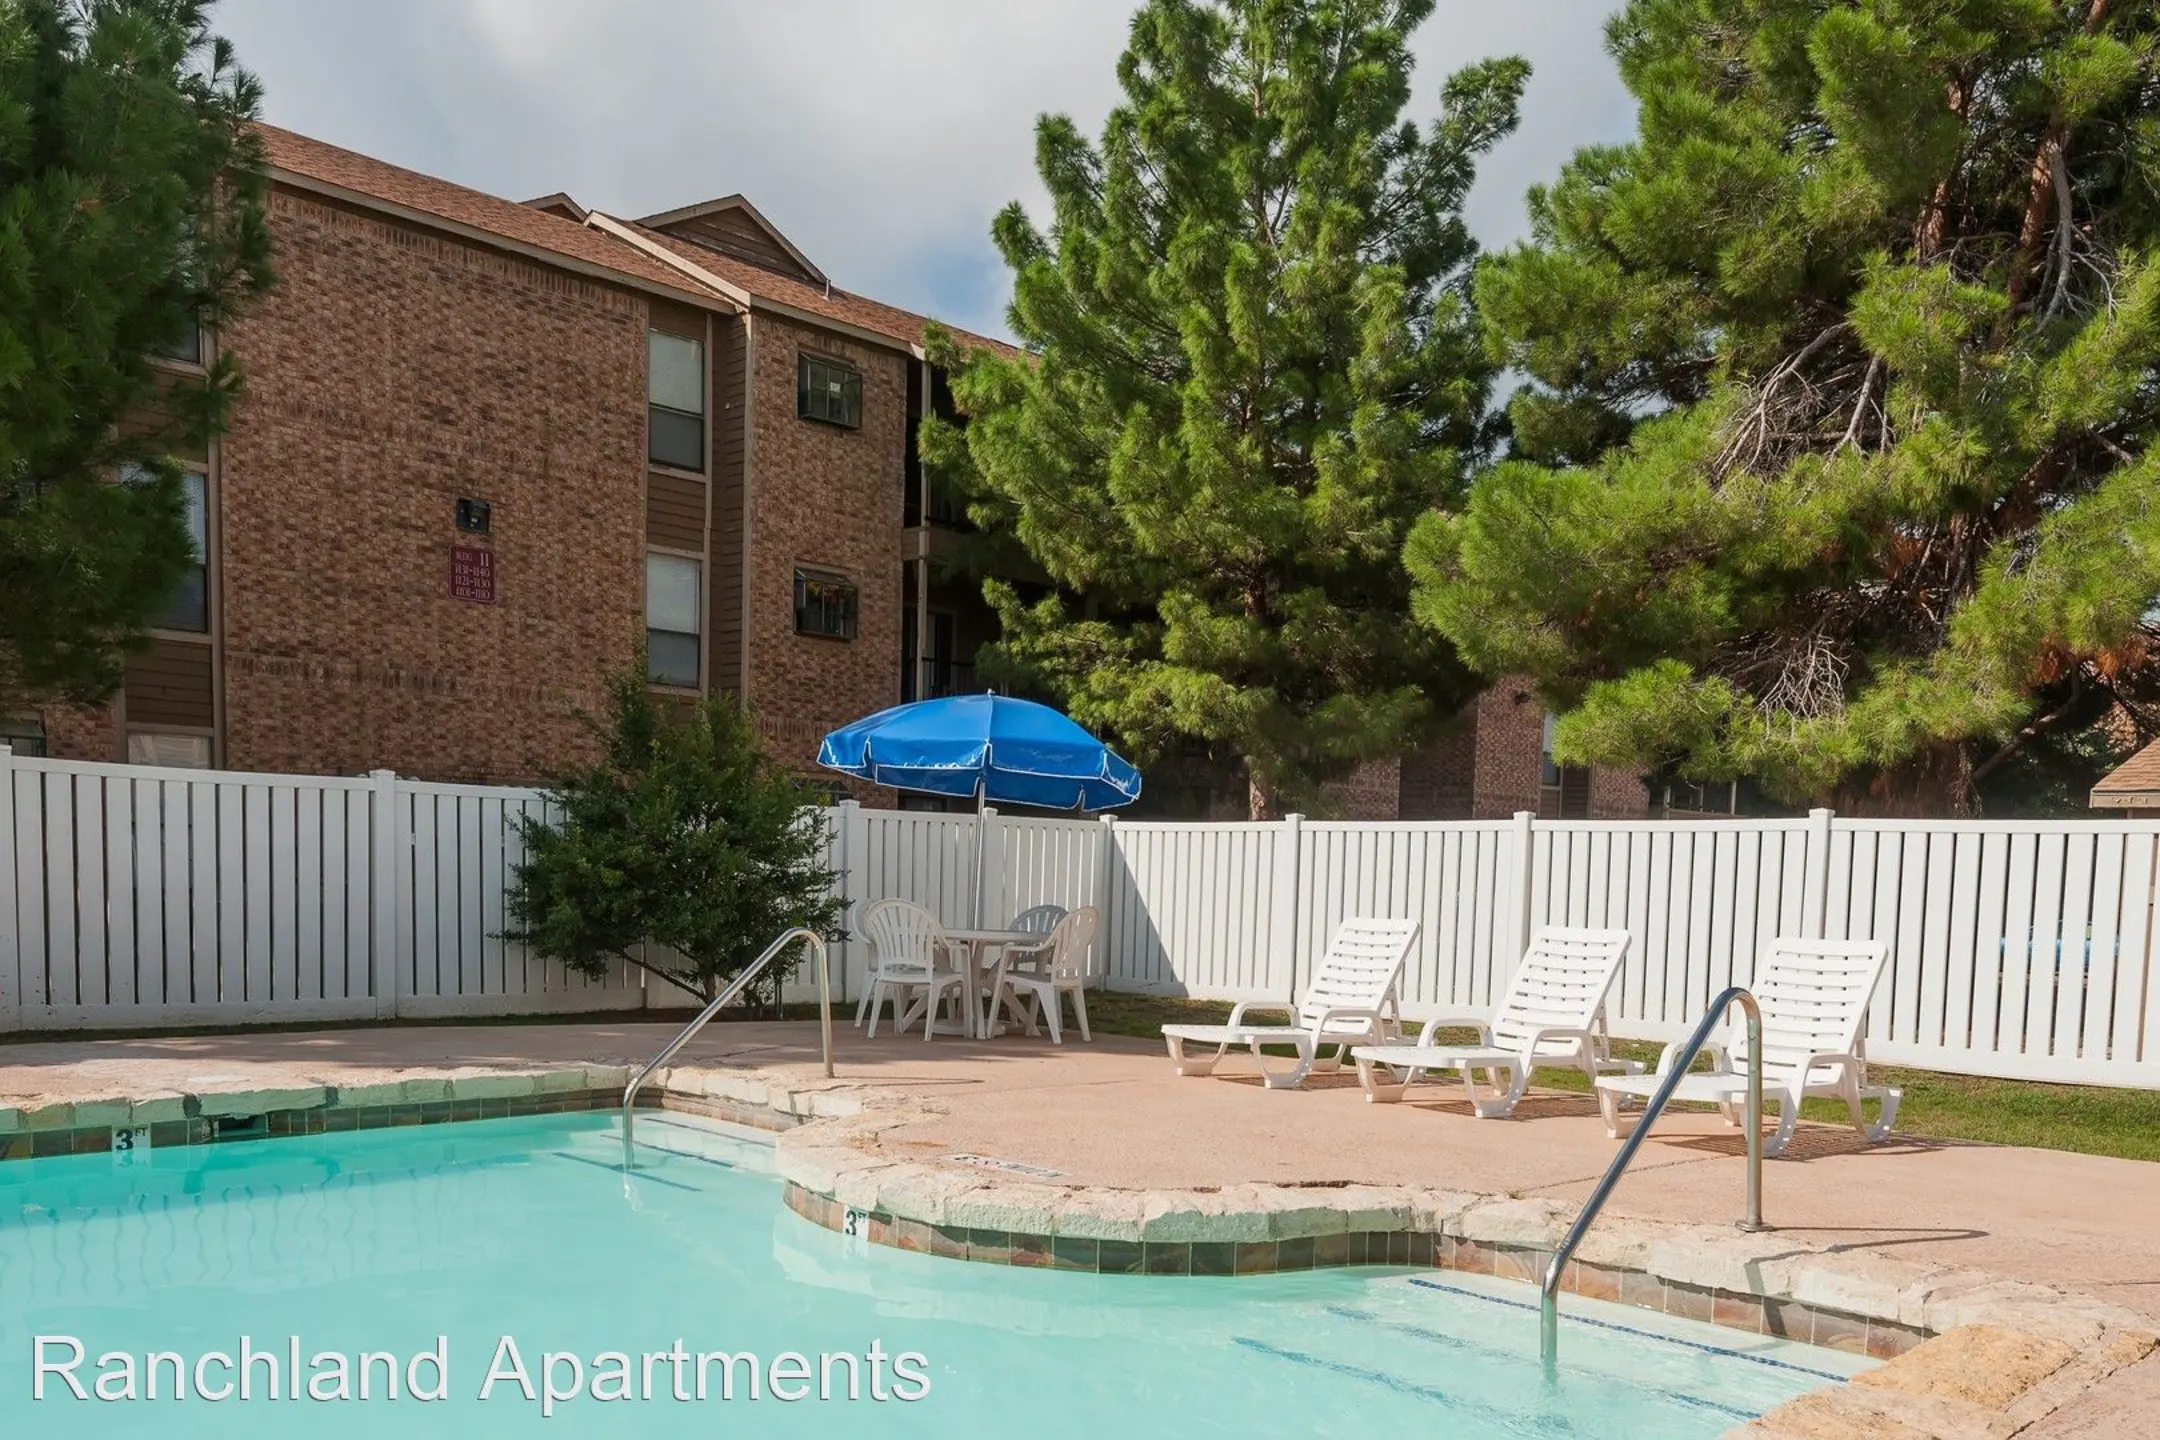 Pool - Ranchland Apartments - Midland, TX